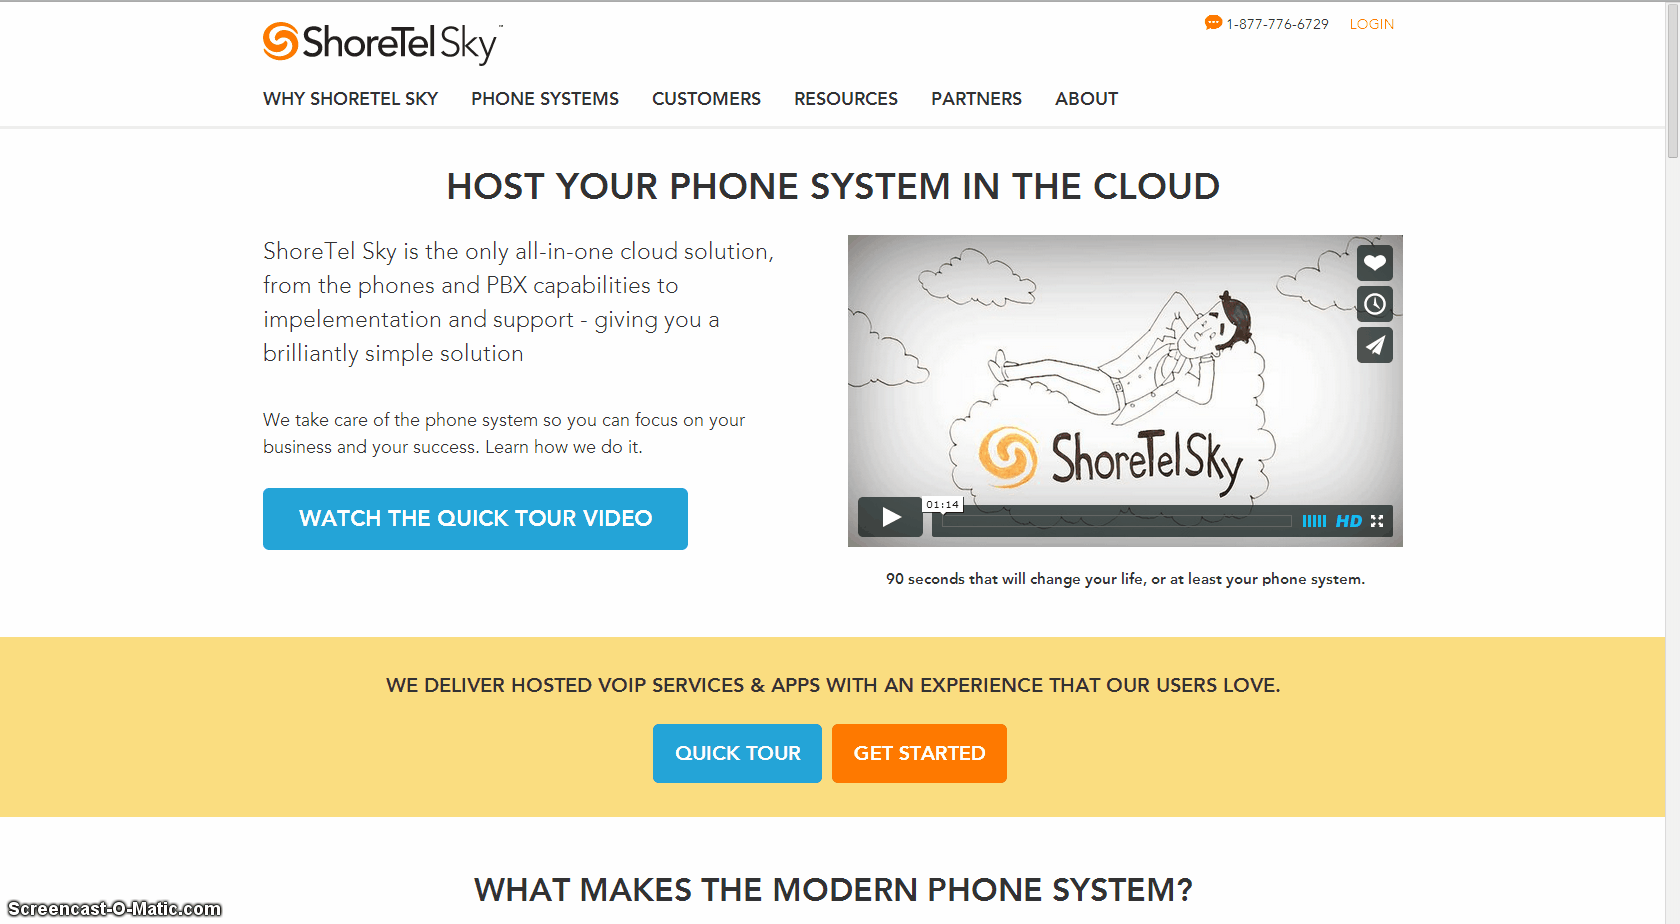 ShoreTel_Sky_Homepage